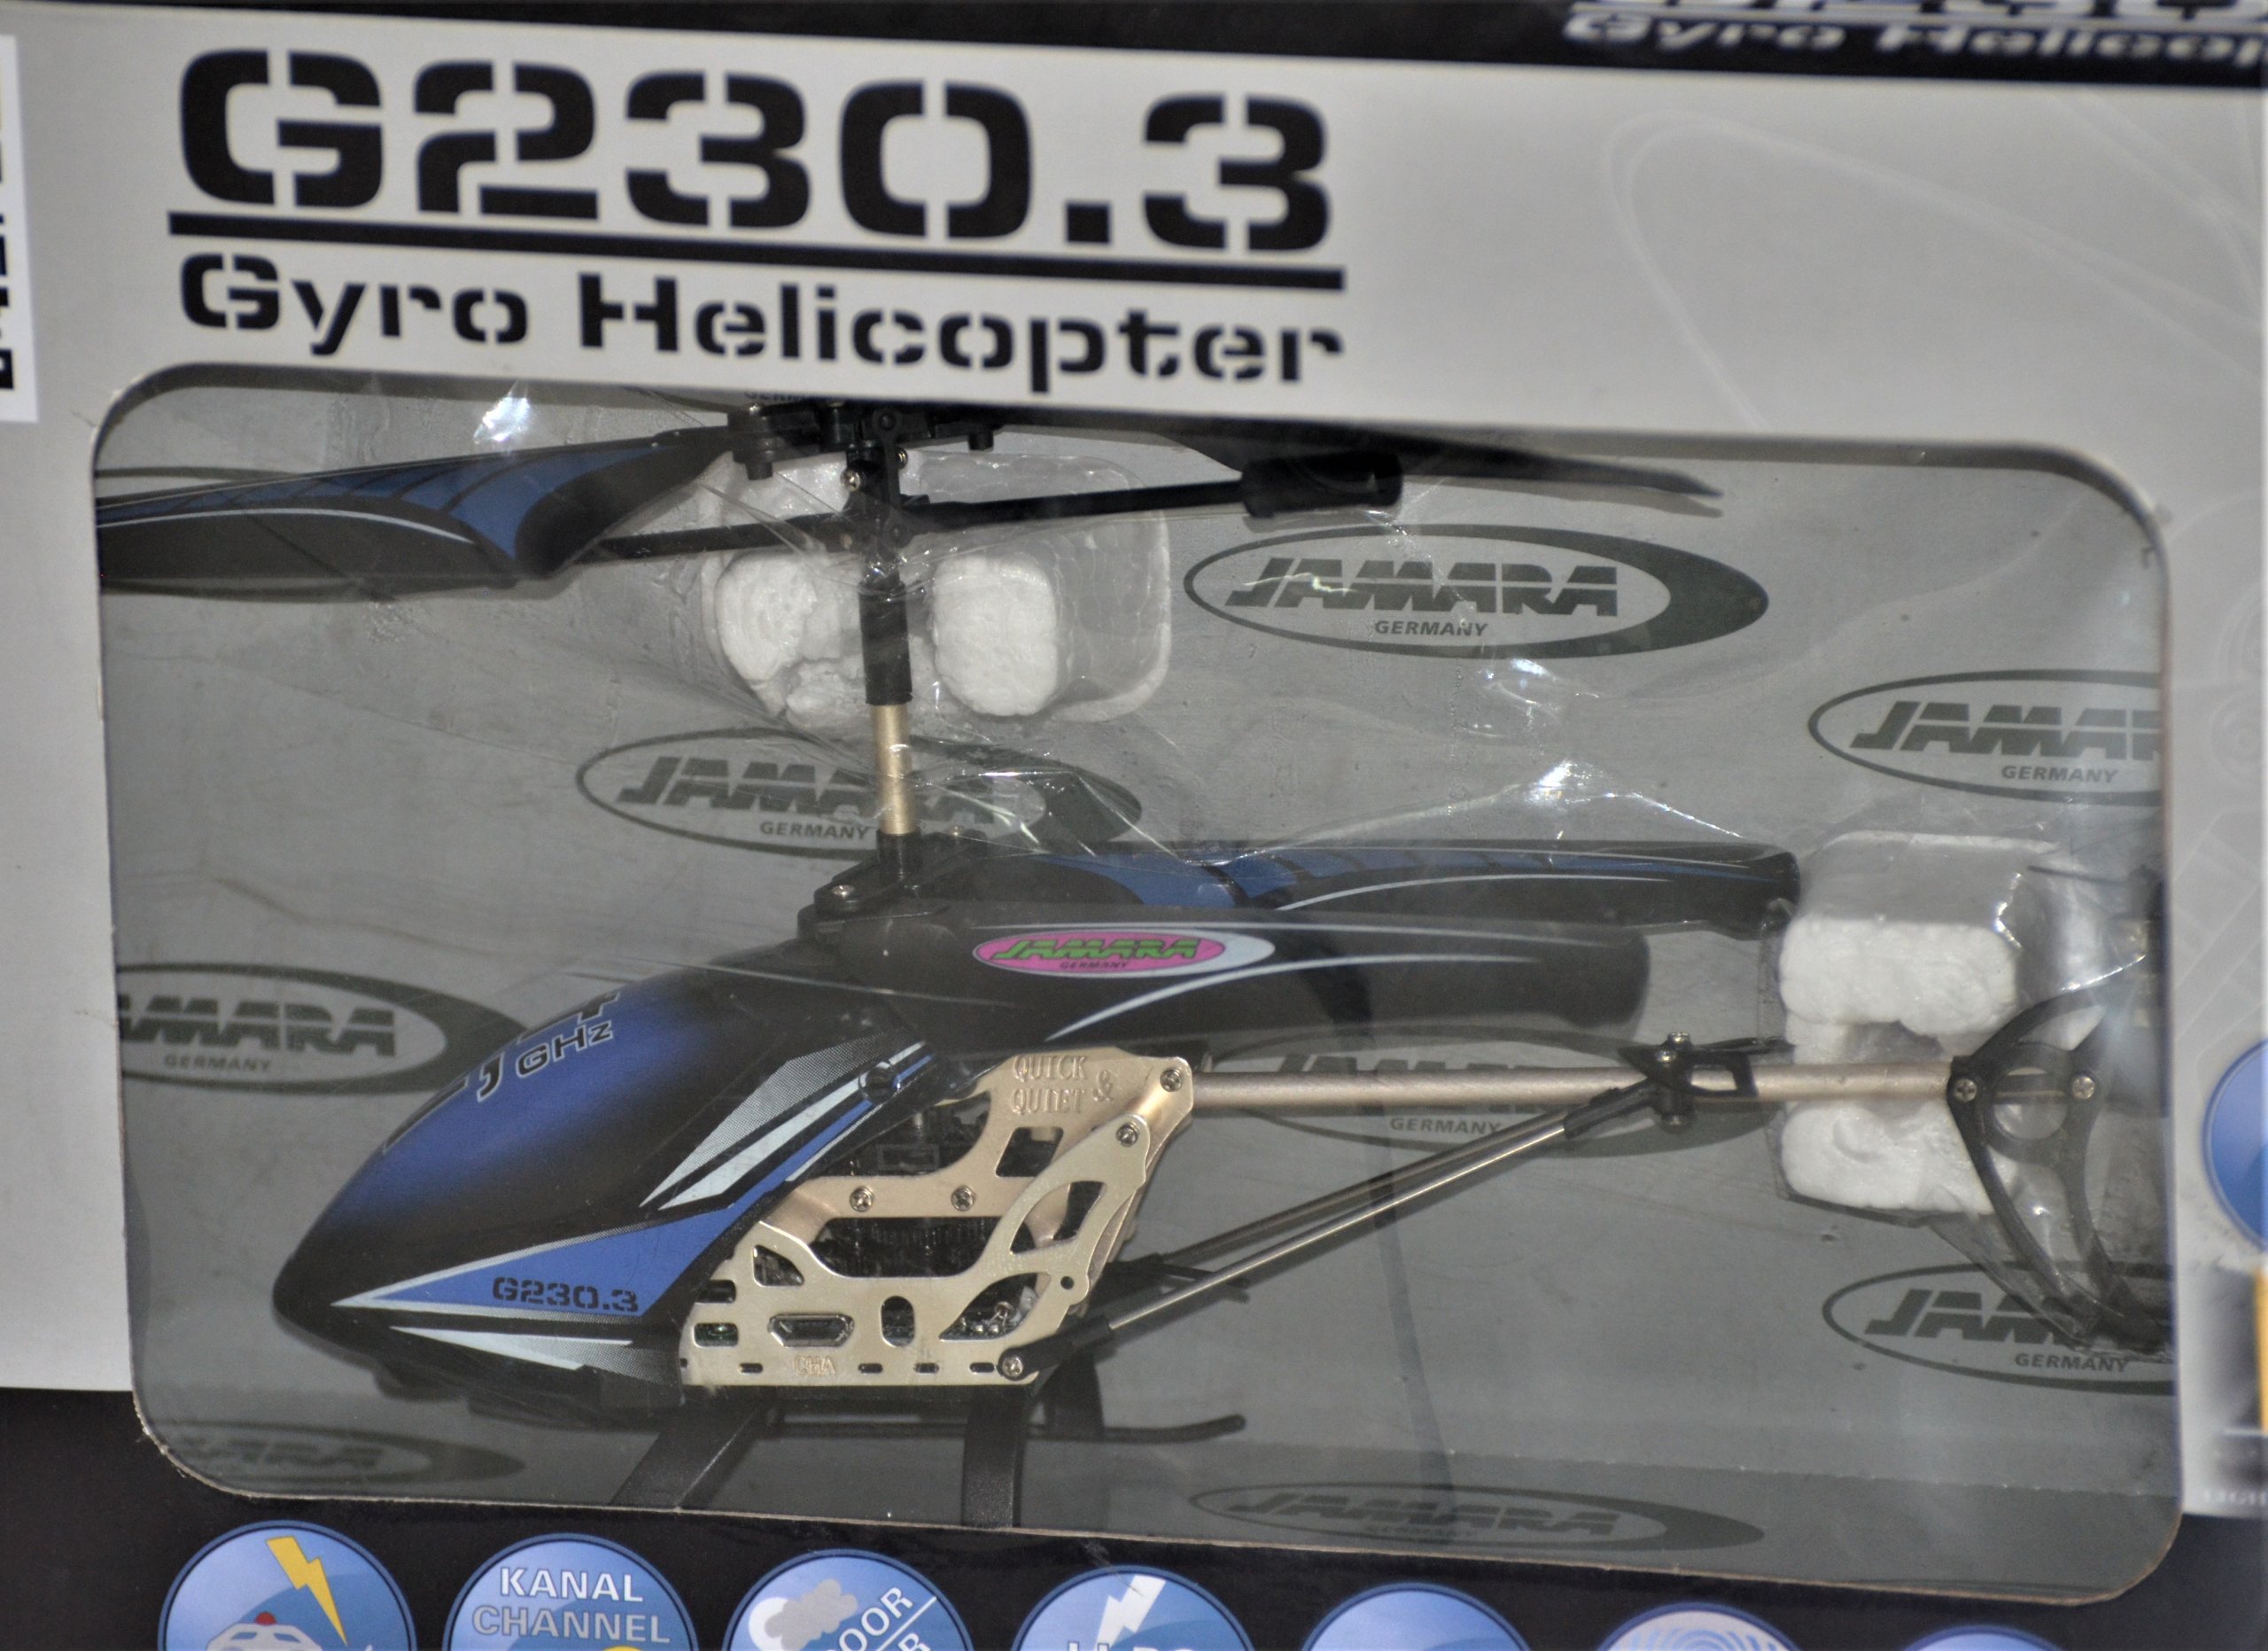 jamaxx gyro helicopter